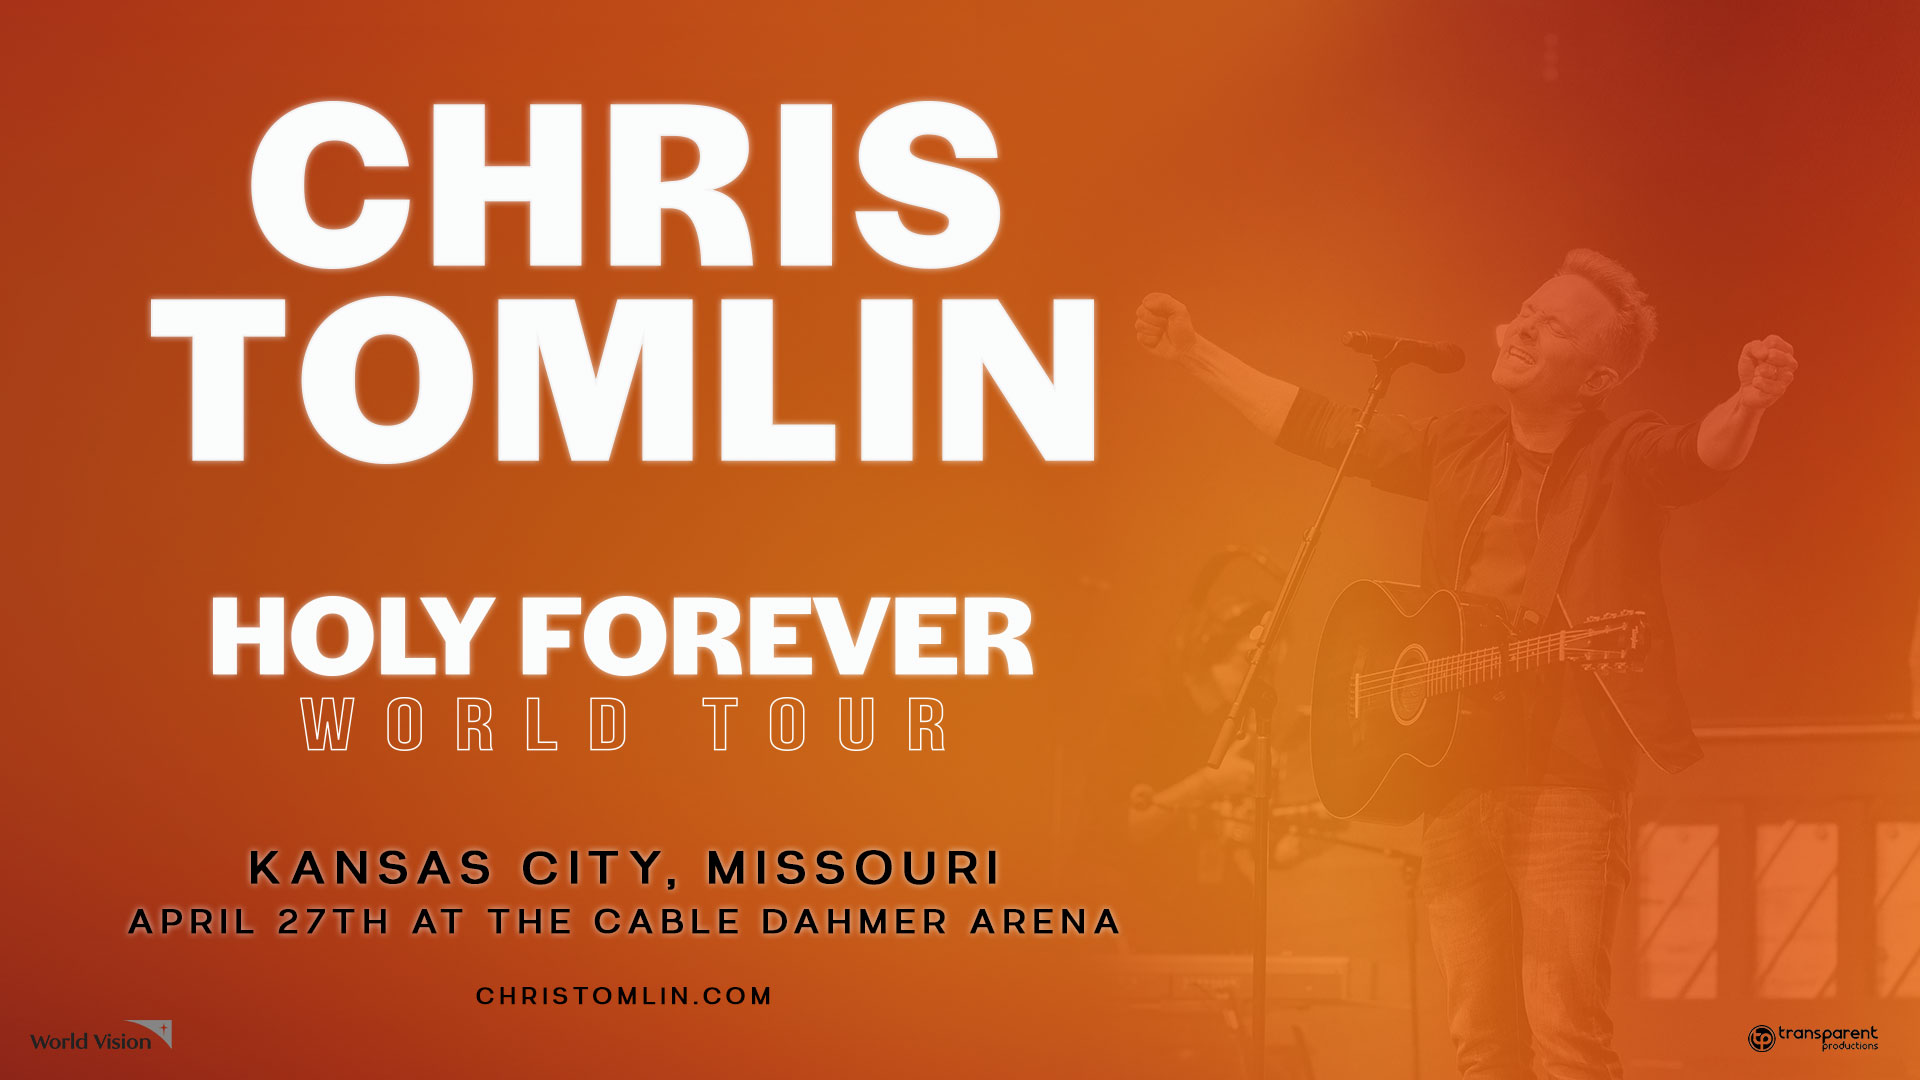 Chris Tomlin Holy Forever Tour image